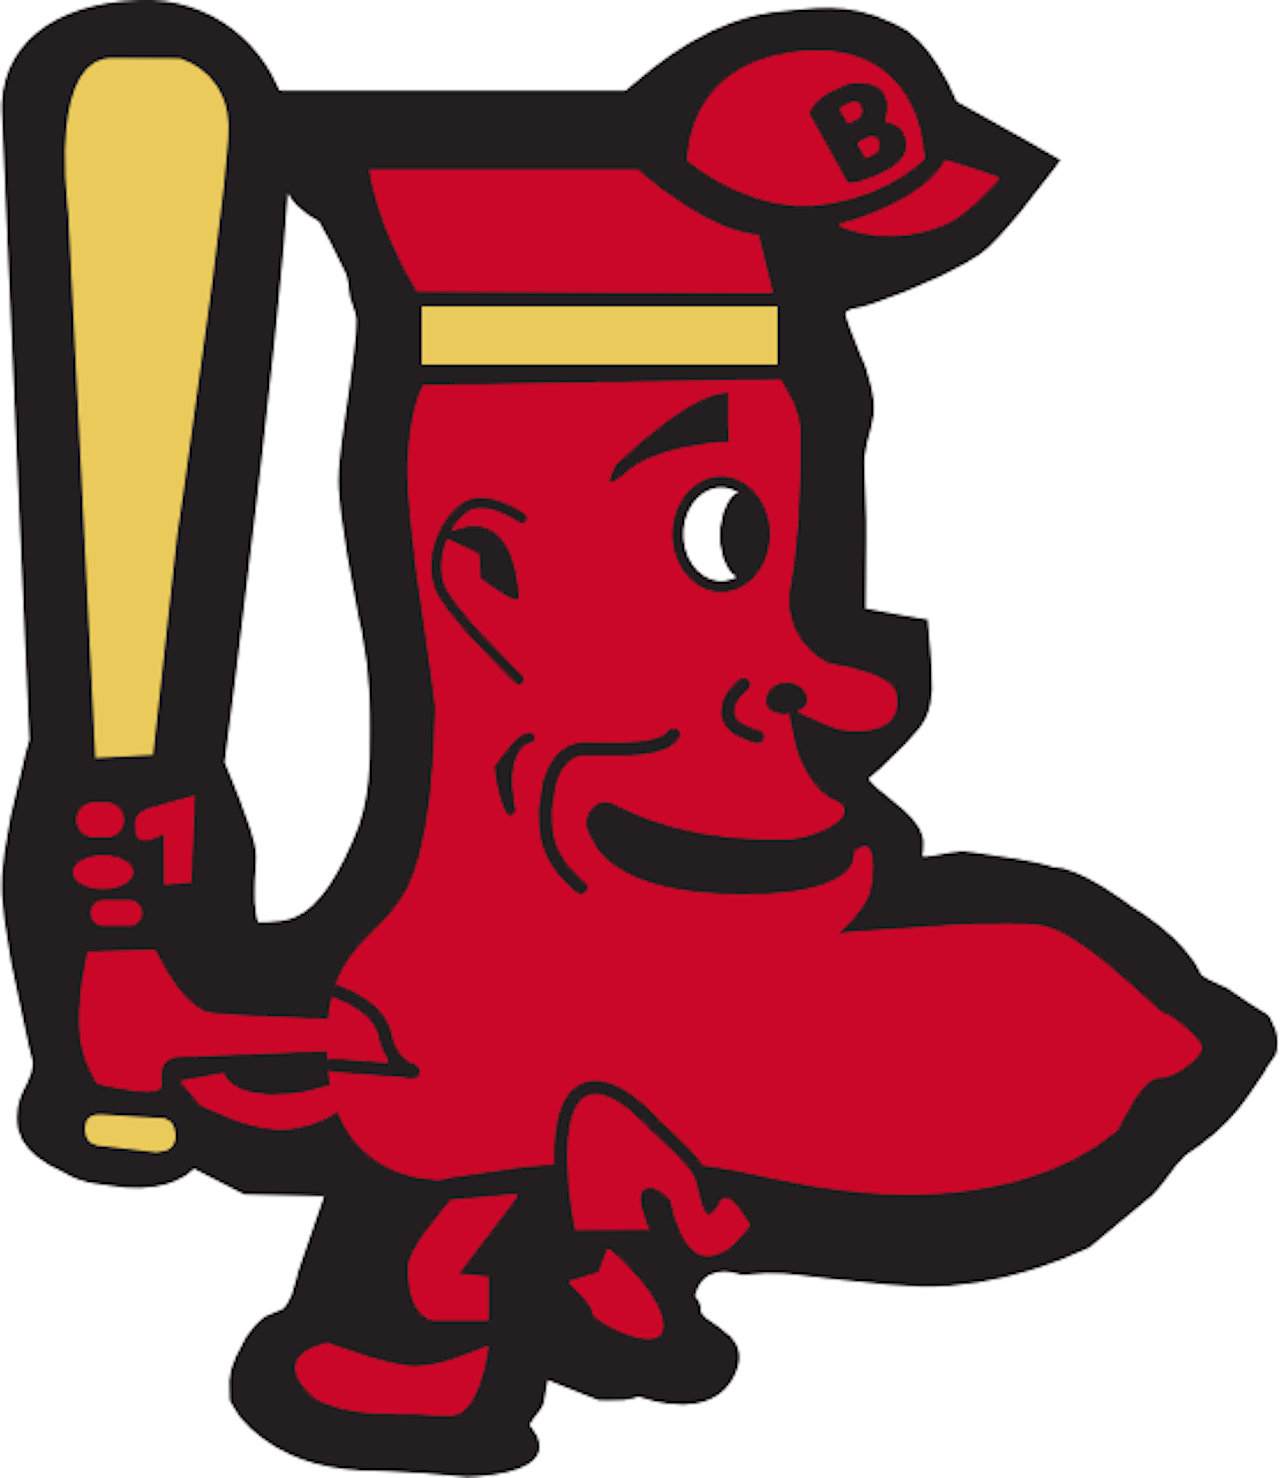 Red Sox: Alternate logo, 1950-59